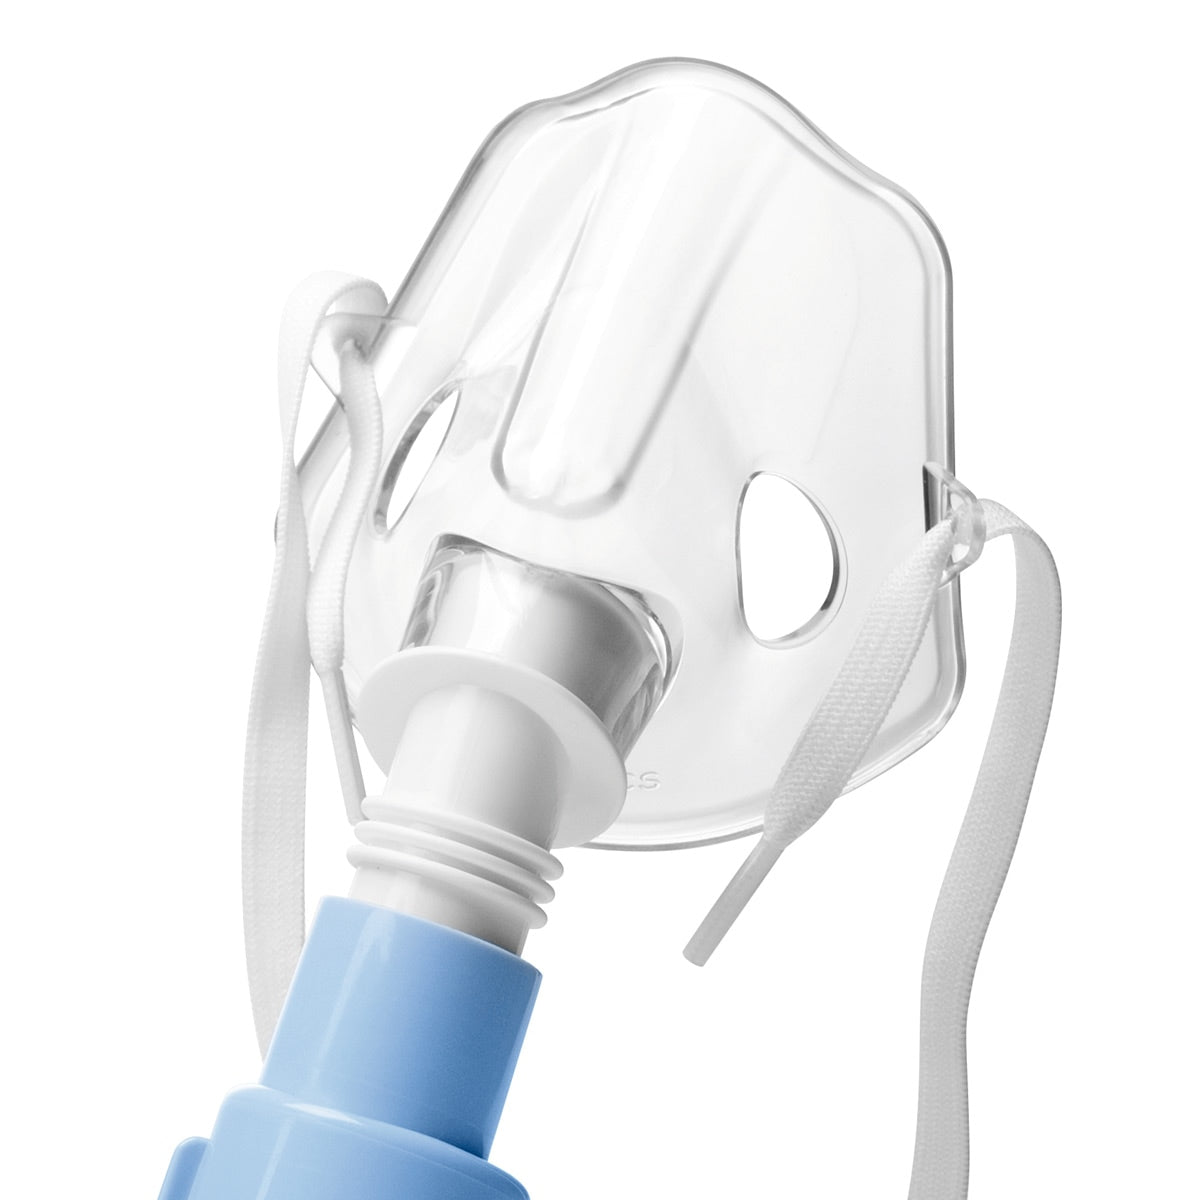 SideStream Reusable Pediatric Aerosol Mask for Nebulizers